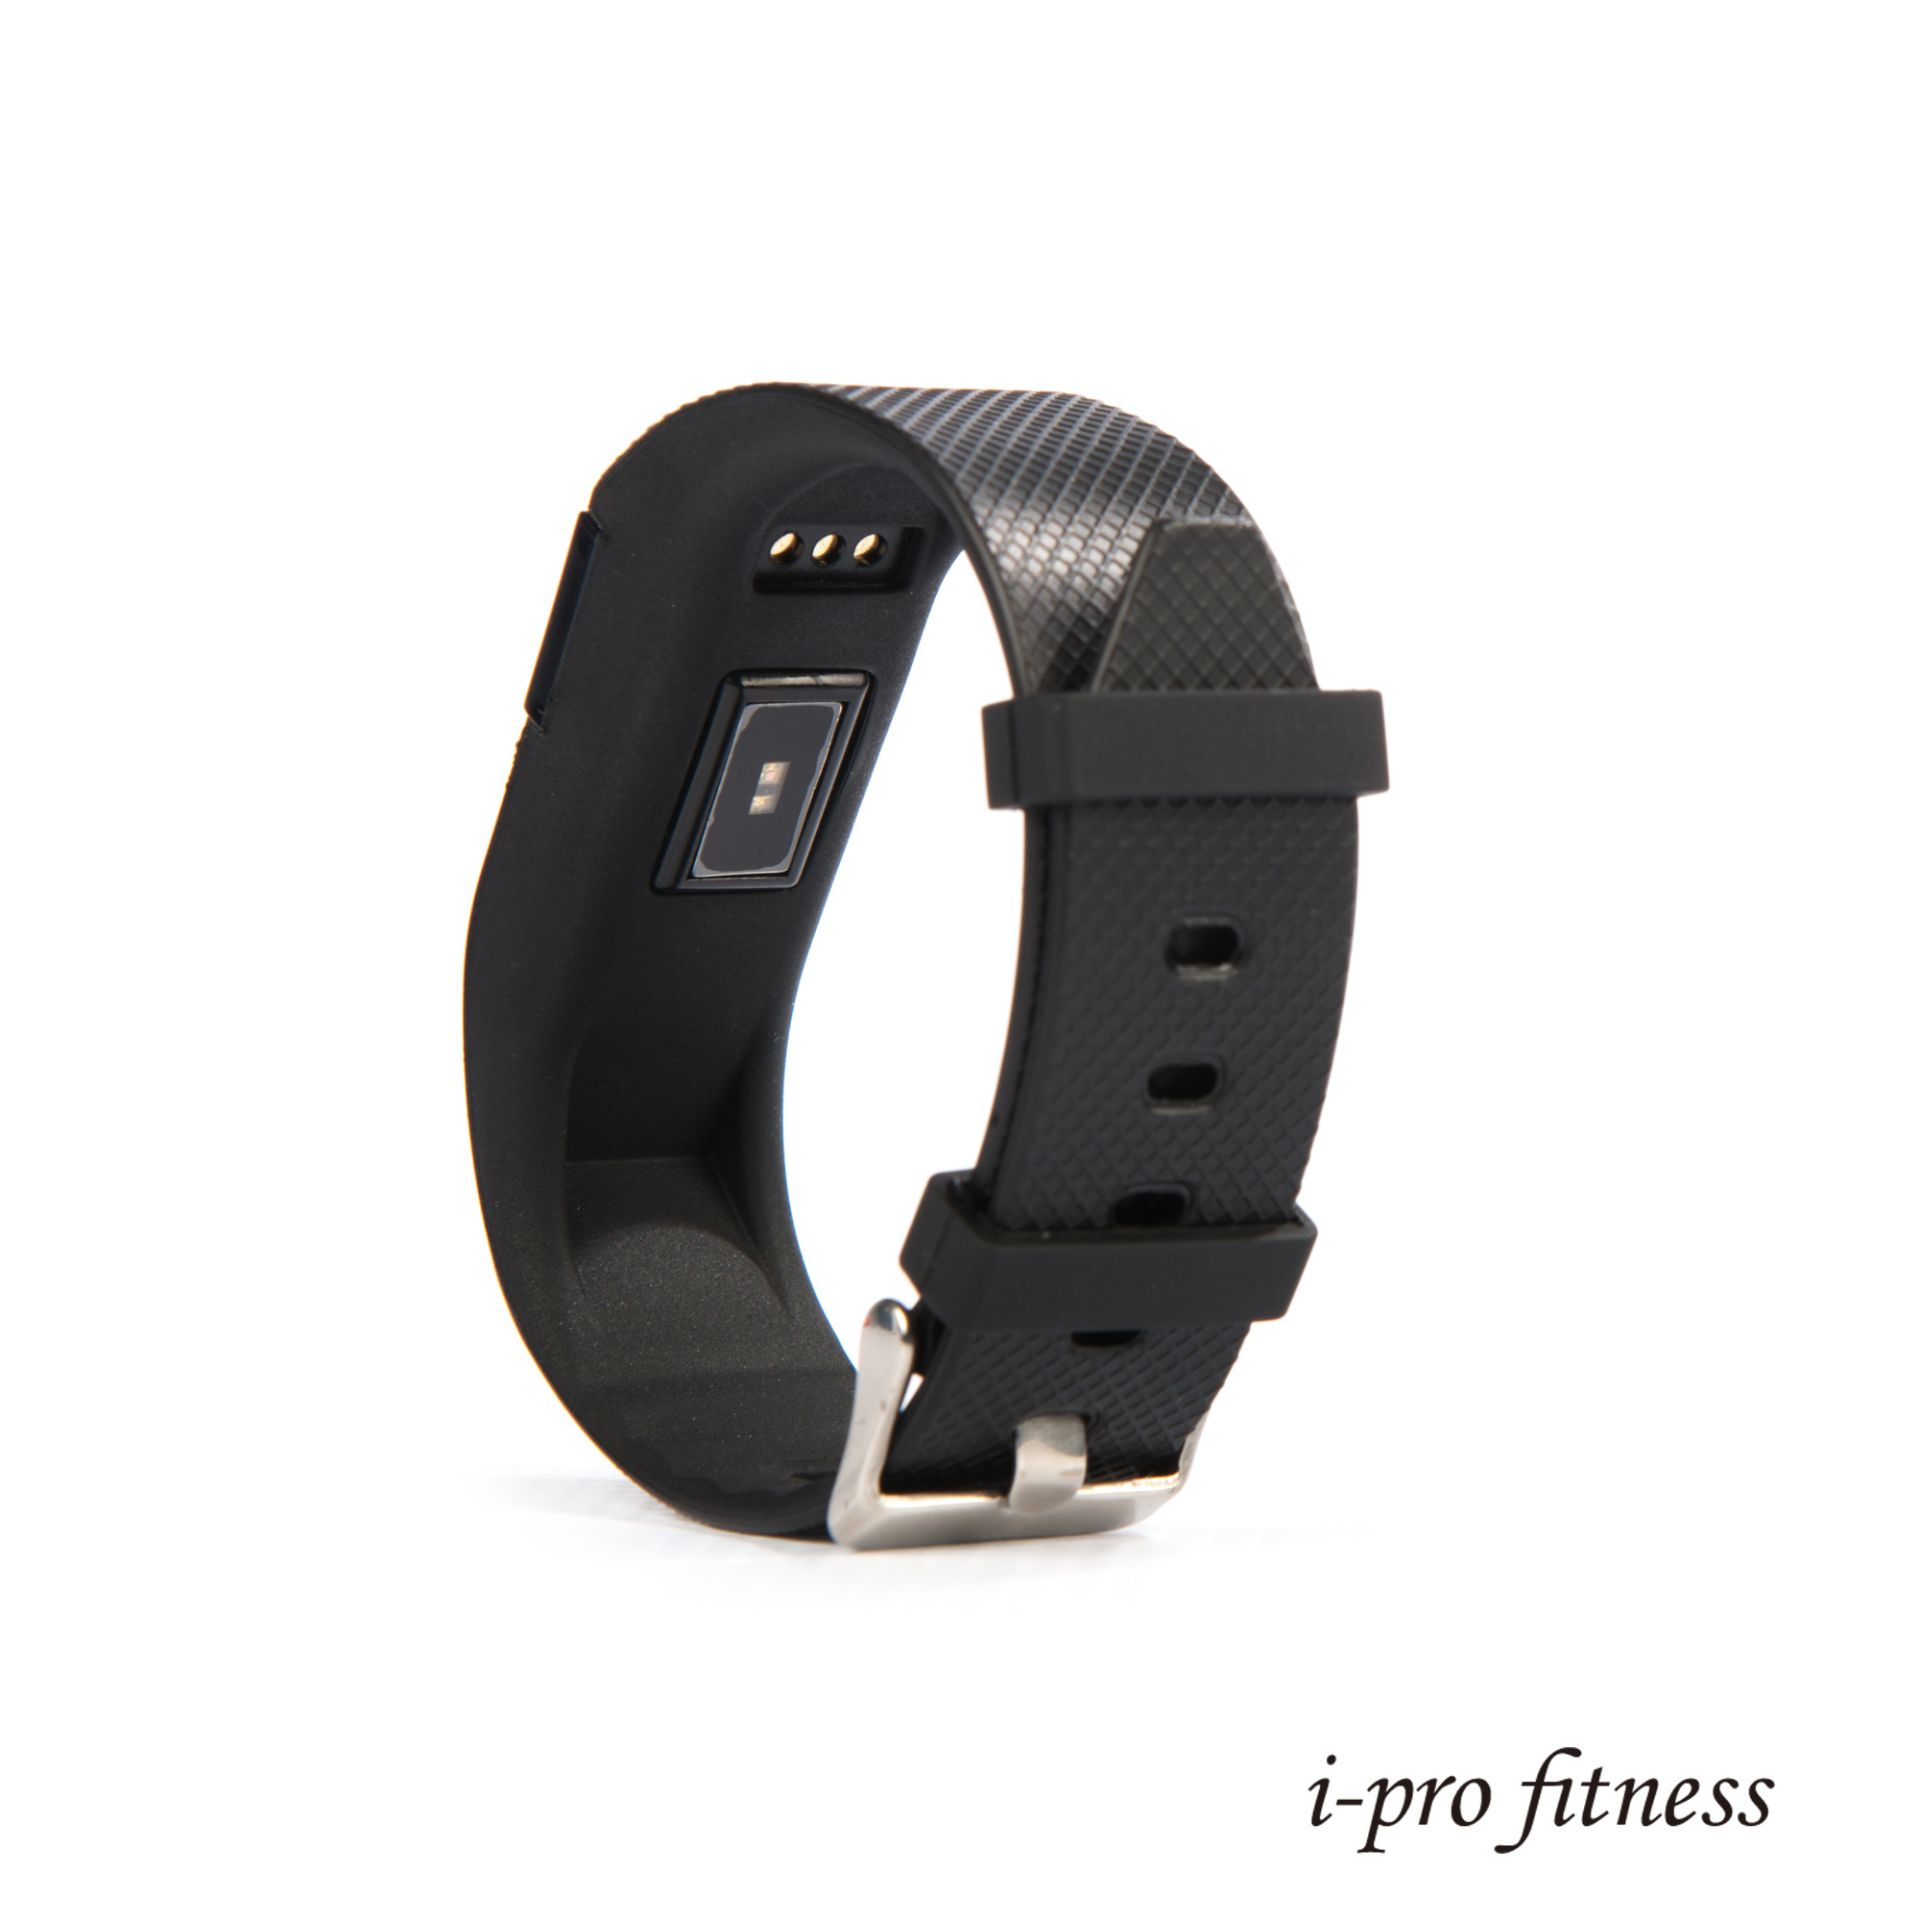 10x Fitness Tracker i-pro fitness, Bluetooth 4.0 Sports Smart Bracelet, Heart Rate Monitor, - Image 6 of 6